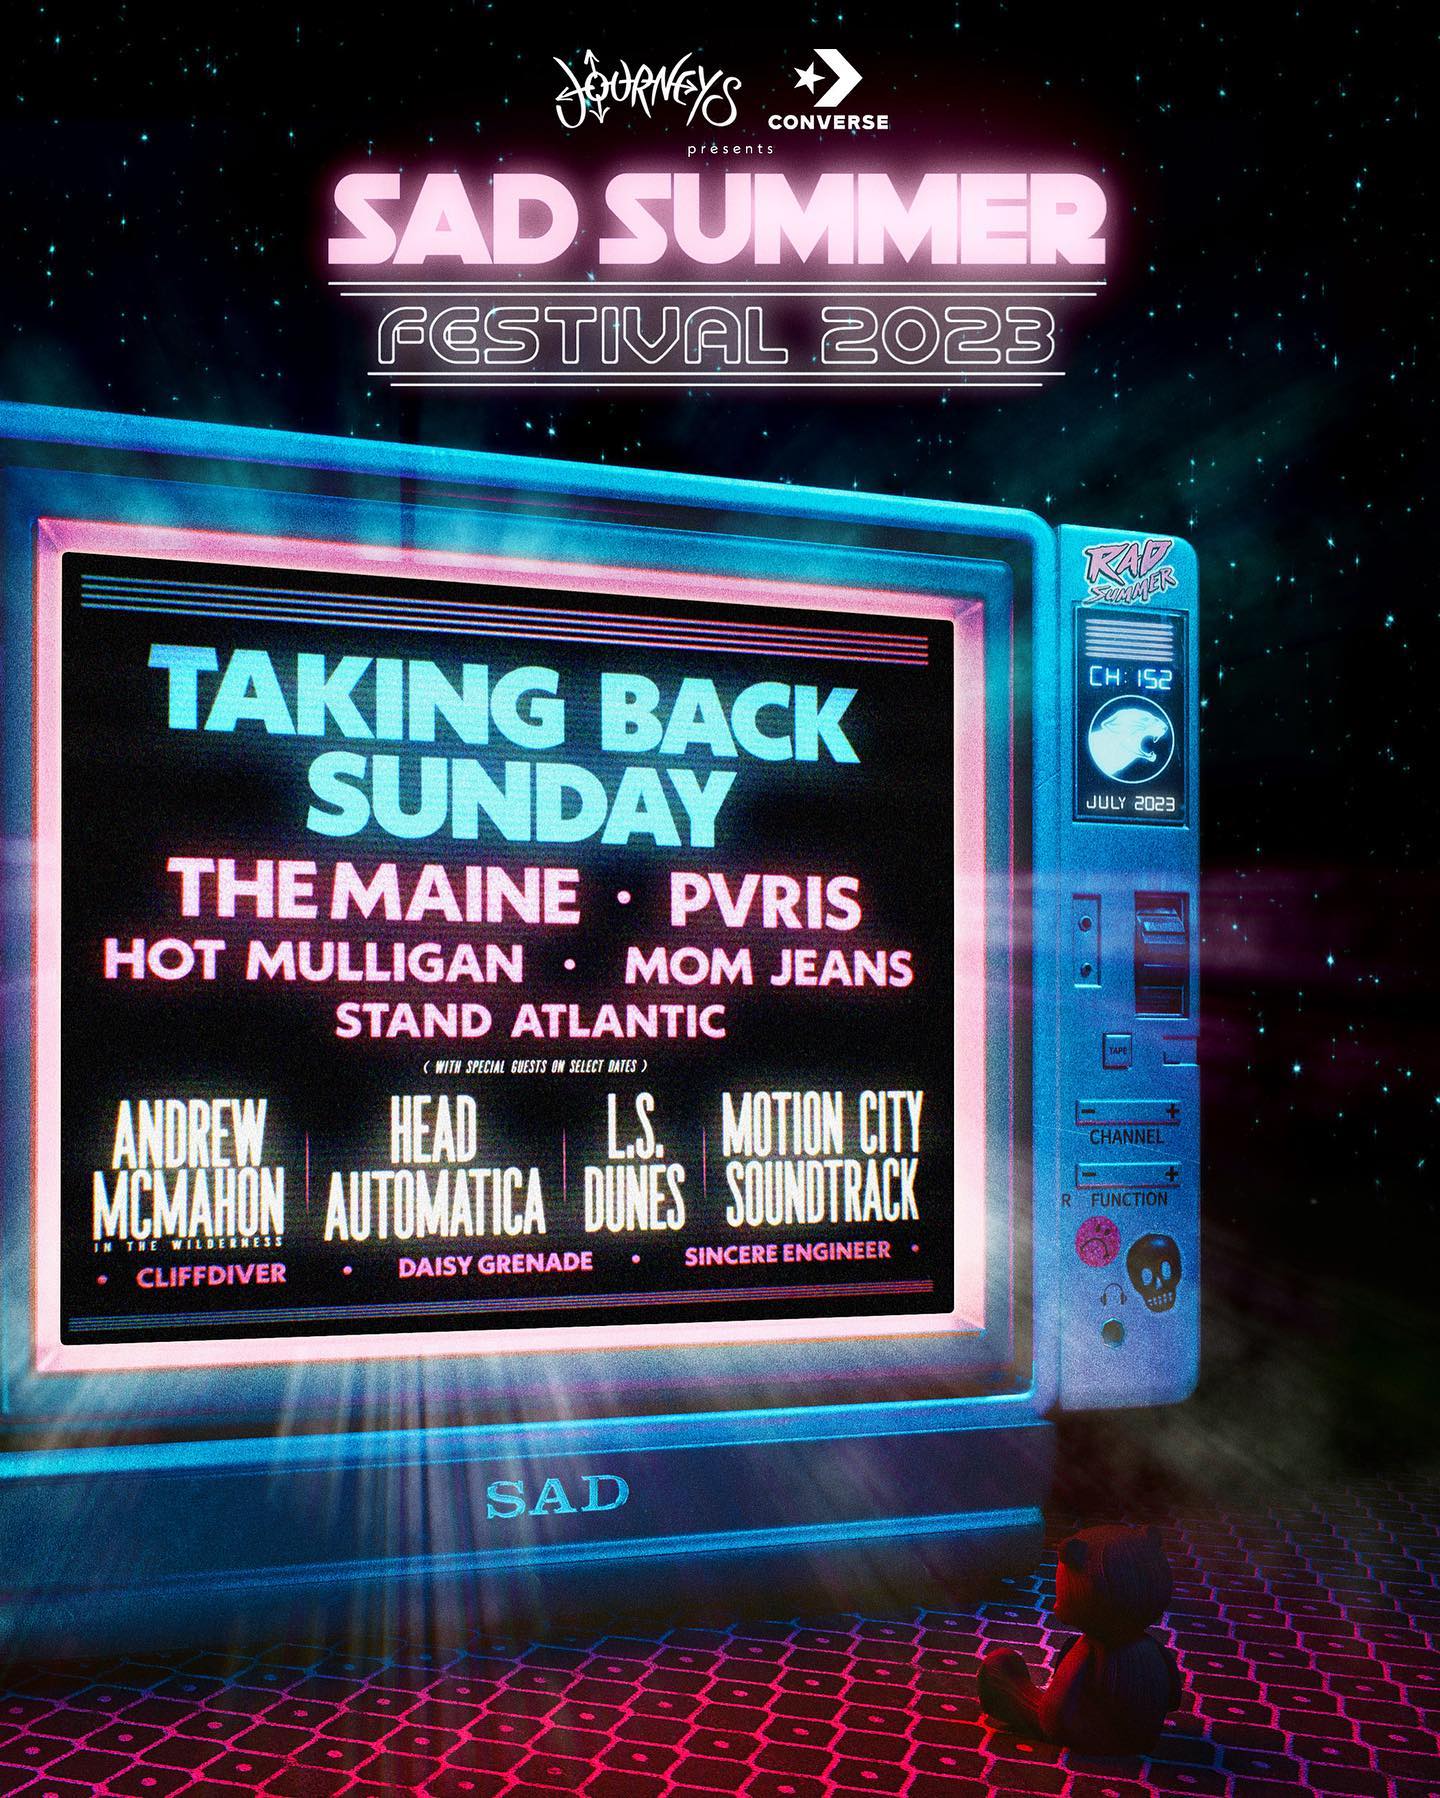 Sad Summer Festival: Taking Back Sunday, The Maine, Pvris, Hot Mulligan & Mom Jeans